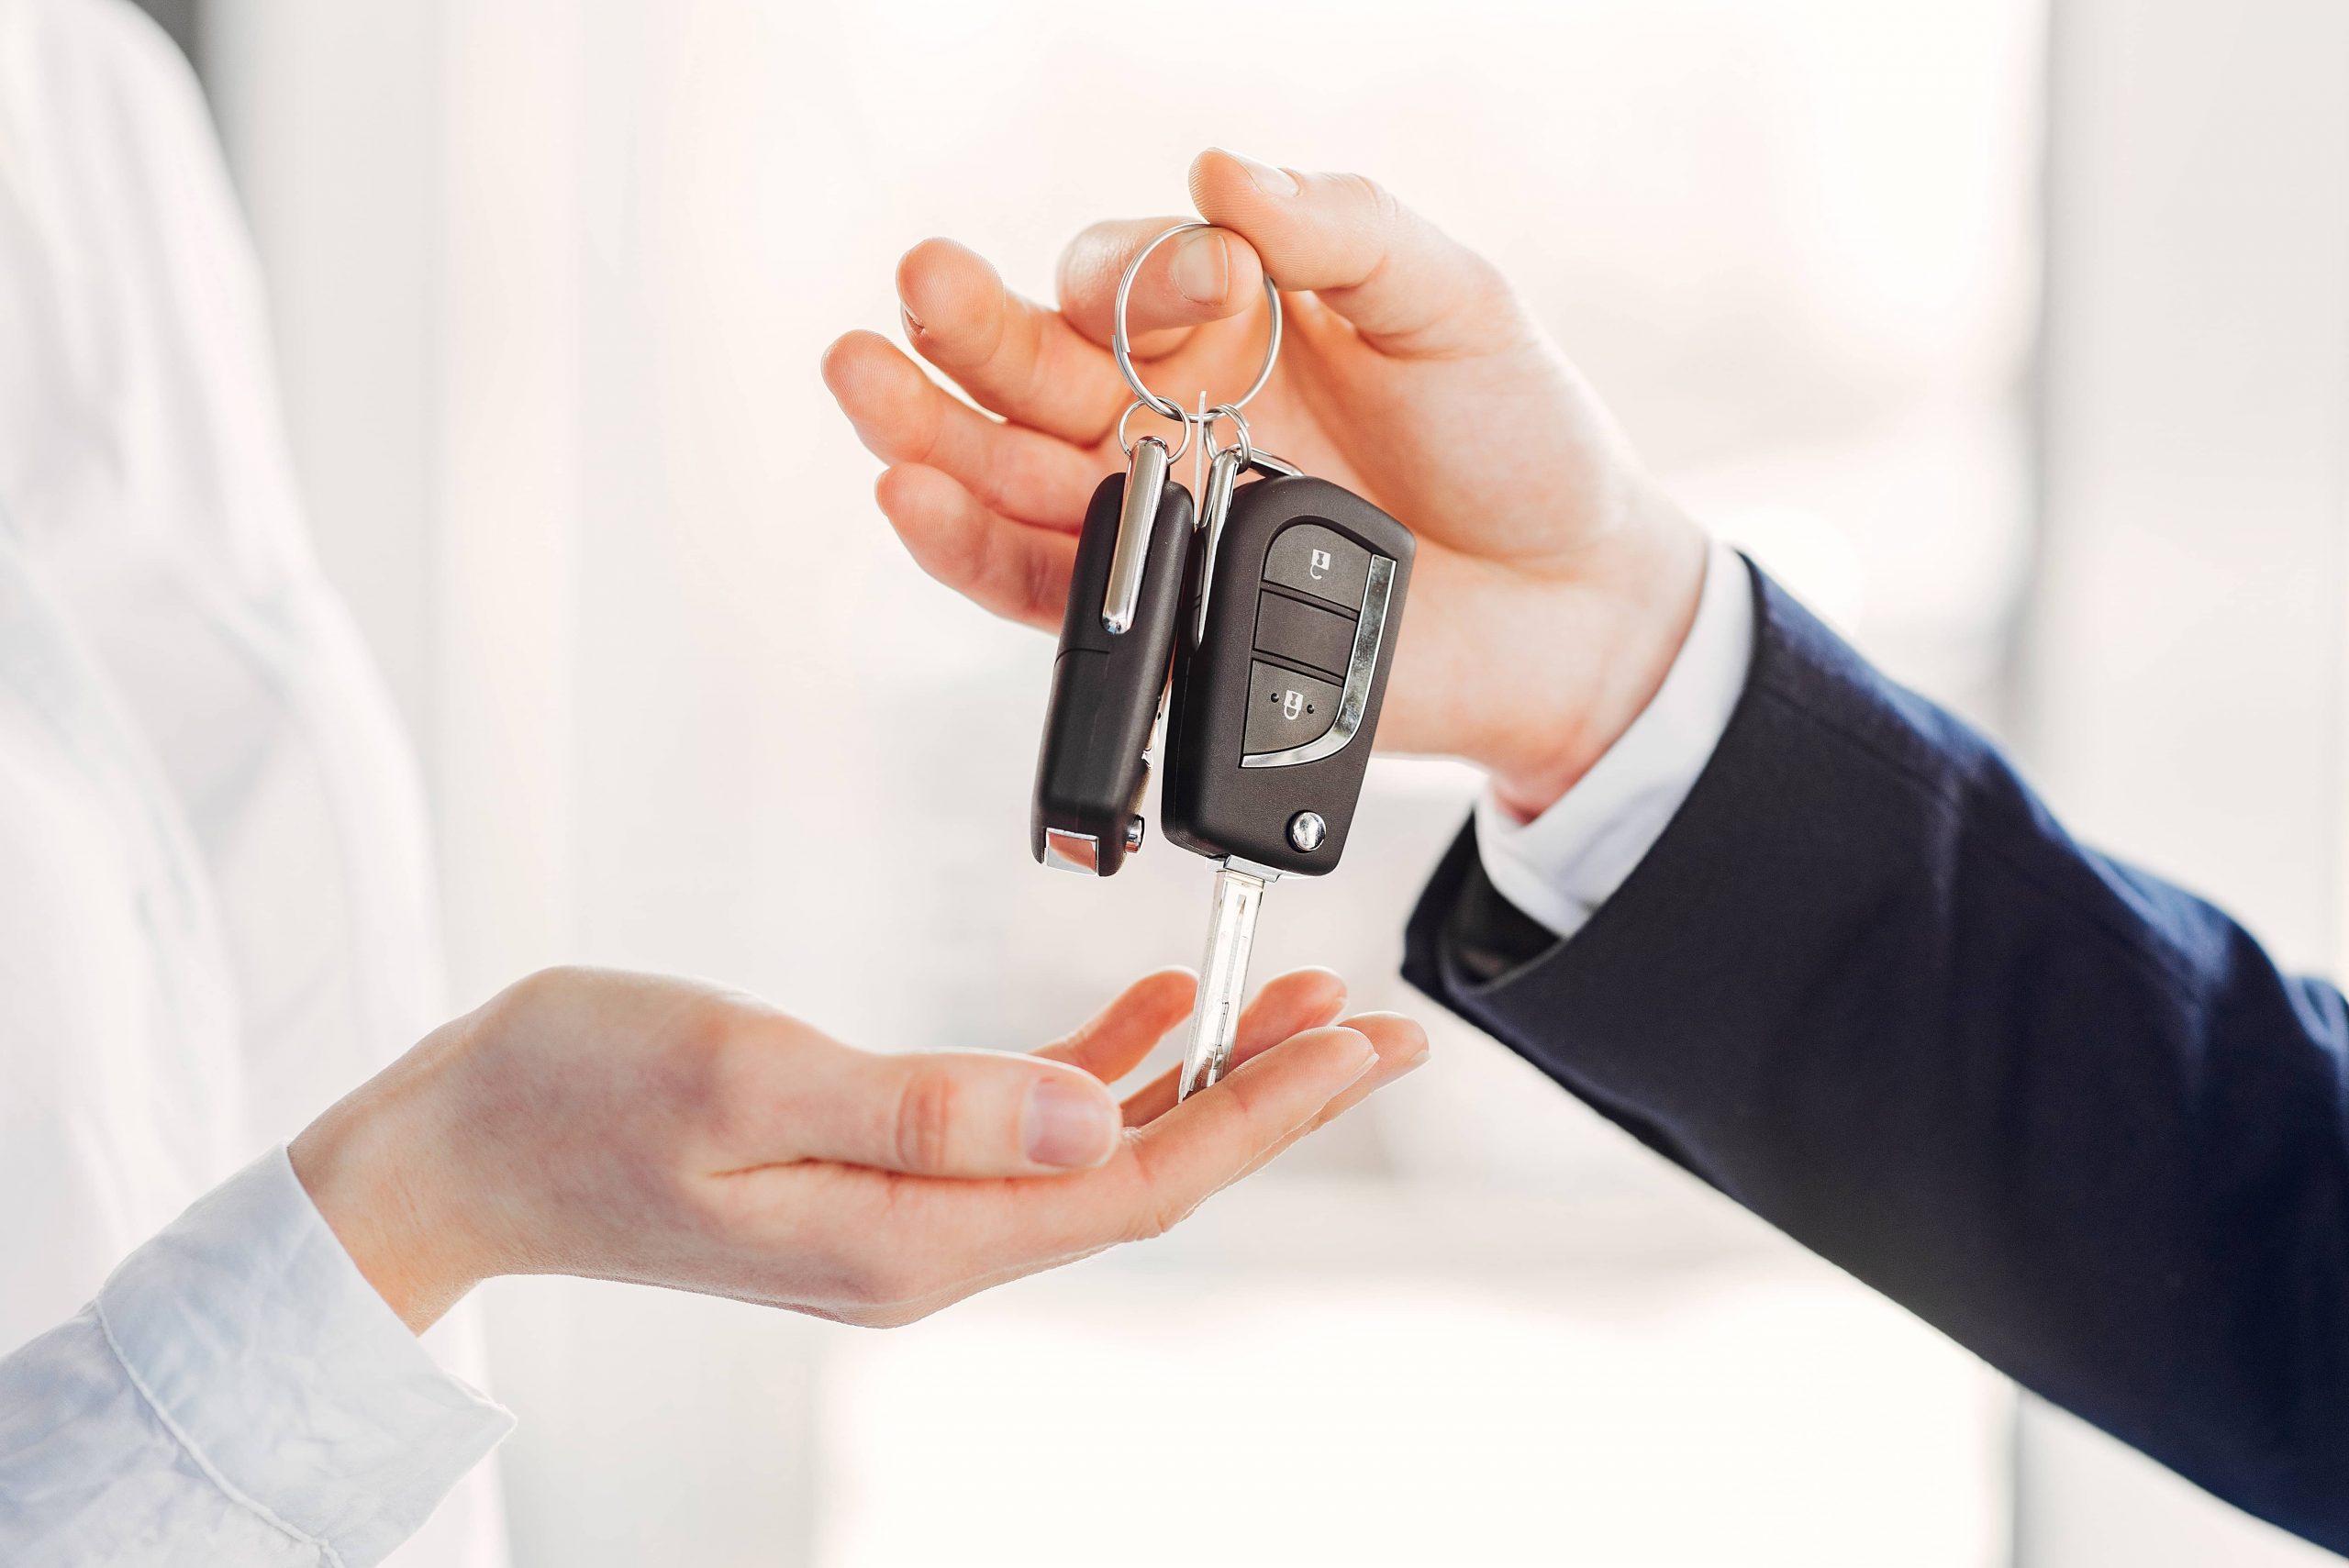 Car salesman handing keys to buyer for new car